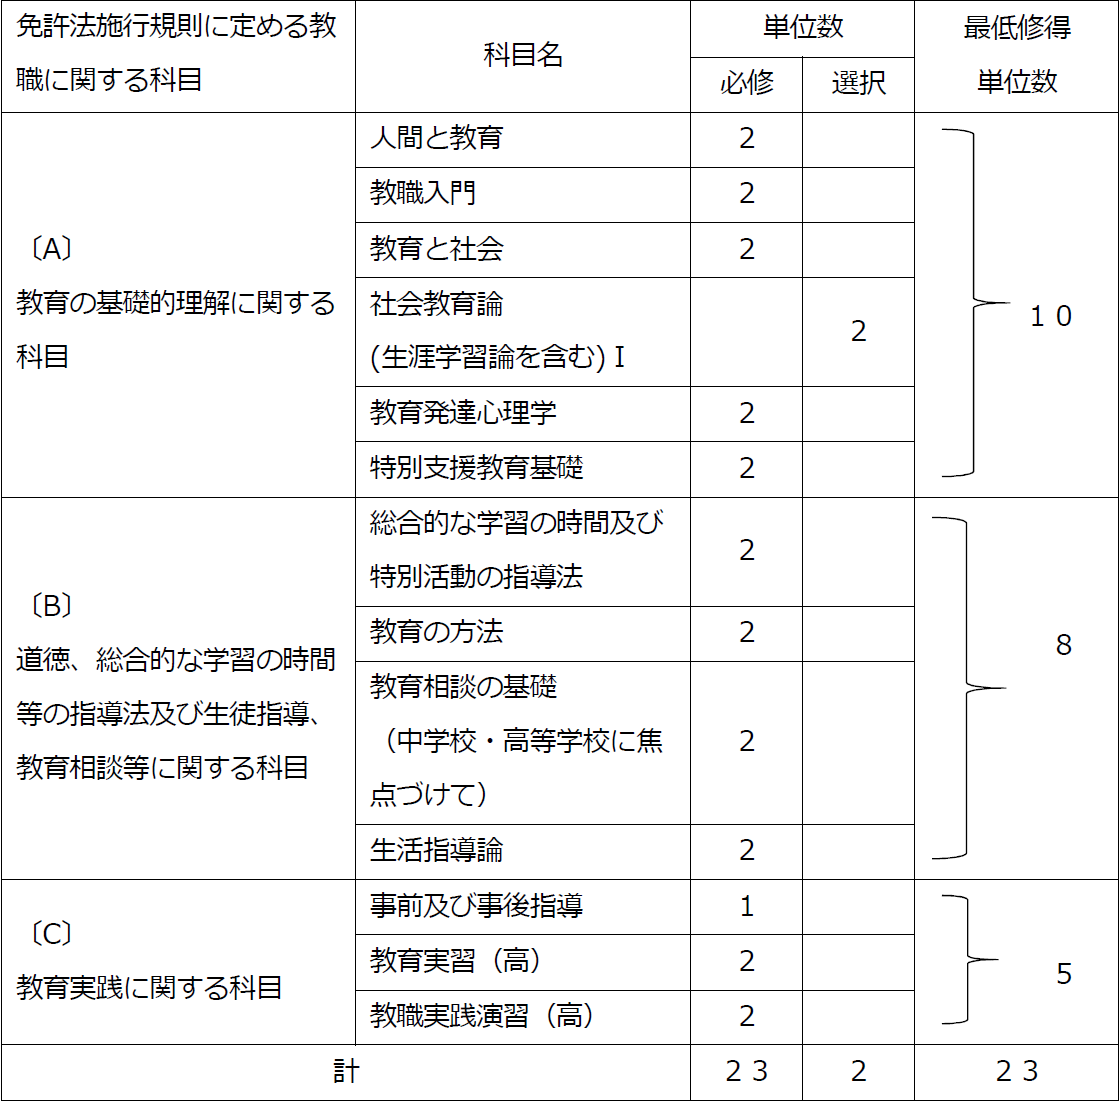 http://kyoumu.adb.fukushima-u.ac.jp/guide/2020/agri/Files/2020/03/%E6%95%99%E5%93%A1%E5%85%8D%E8%A8%B1%E5%8F%96%E5%BE%97%E3%80%80%E8%A1%A8%EF%BC%93200303.png